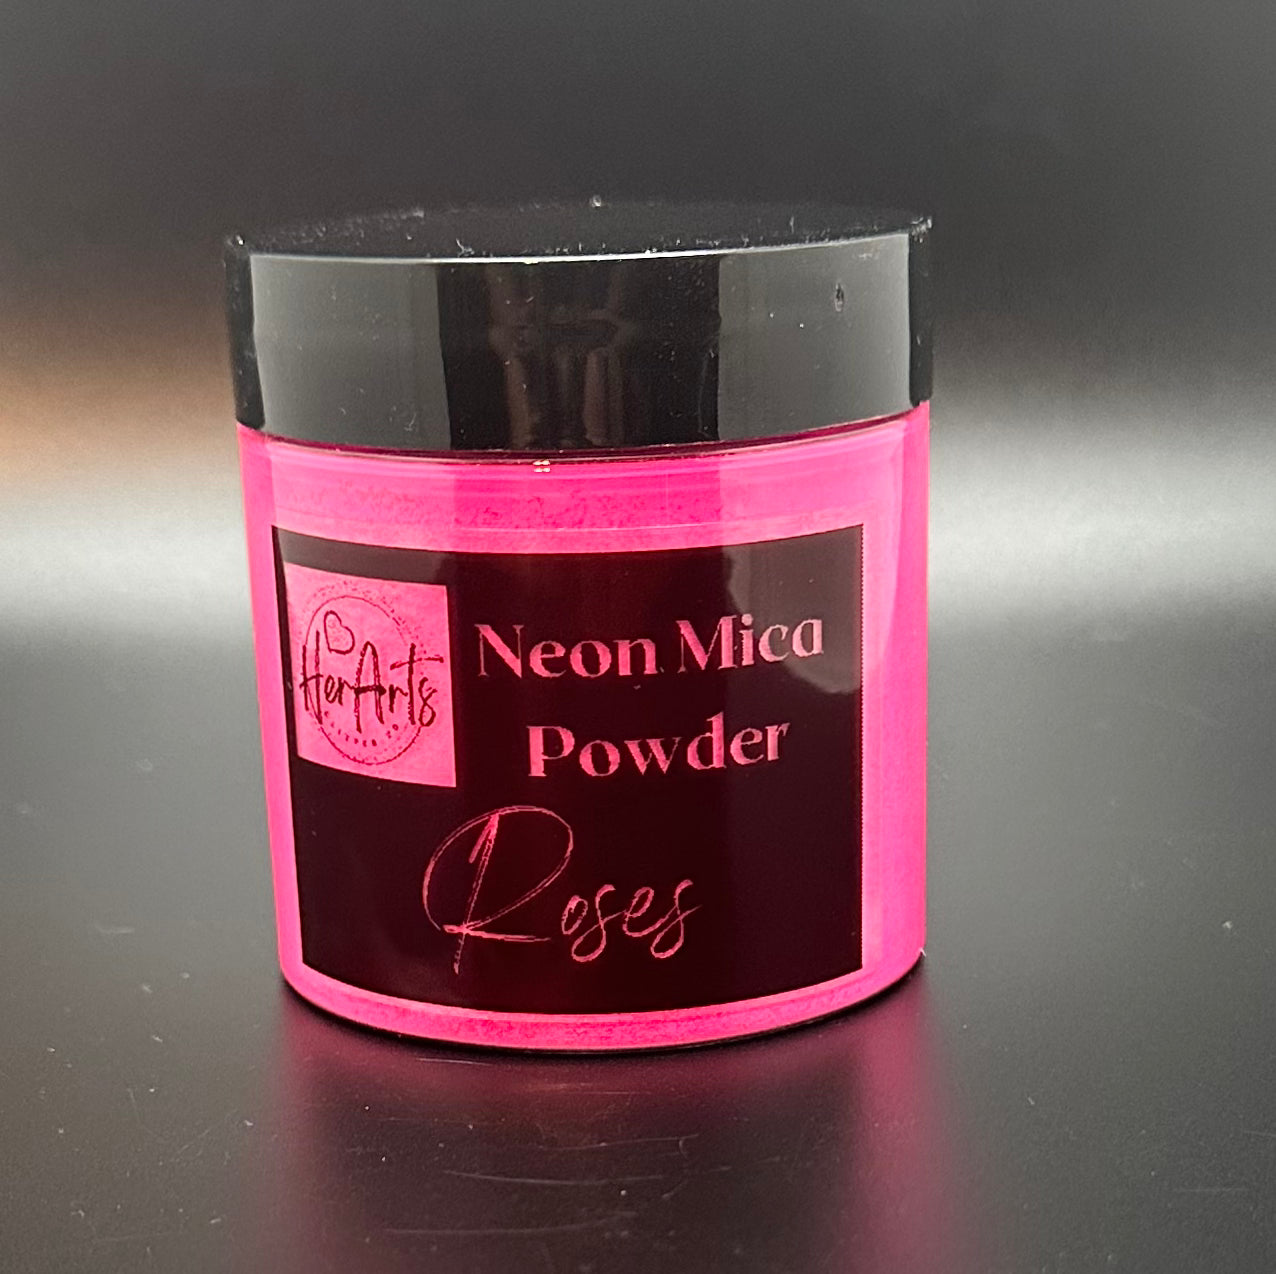 Neon Mica Powder, Roses